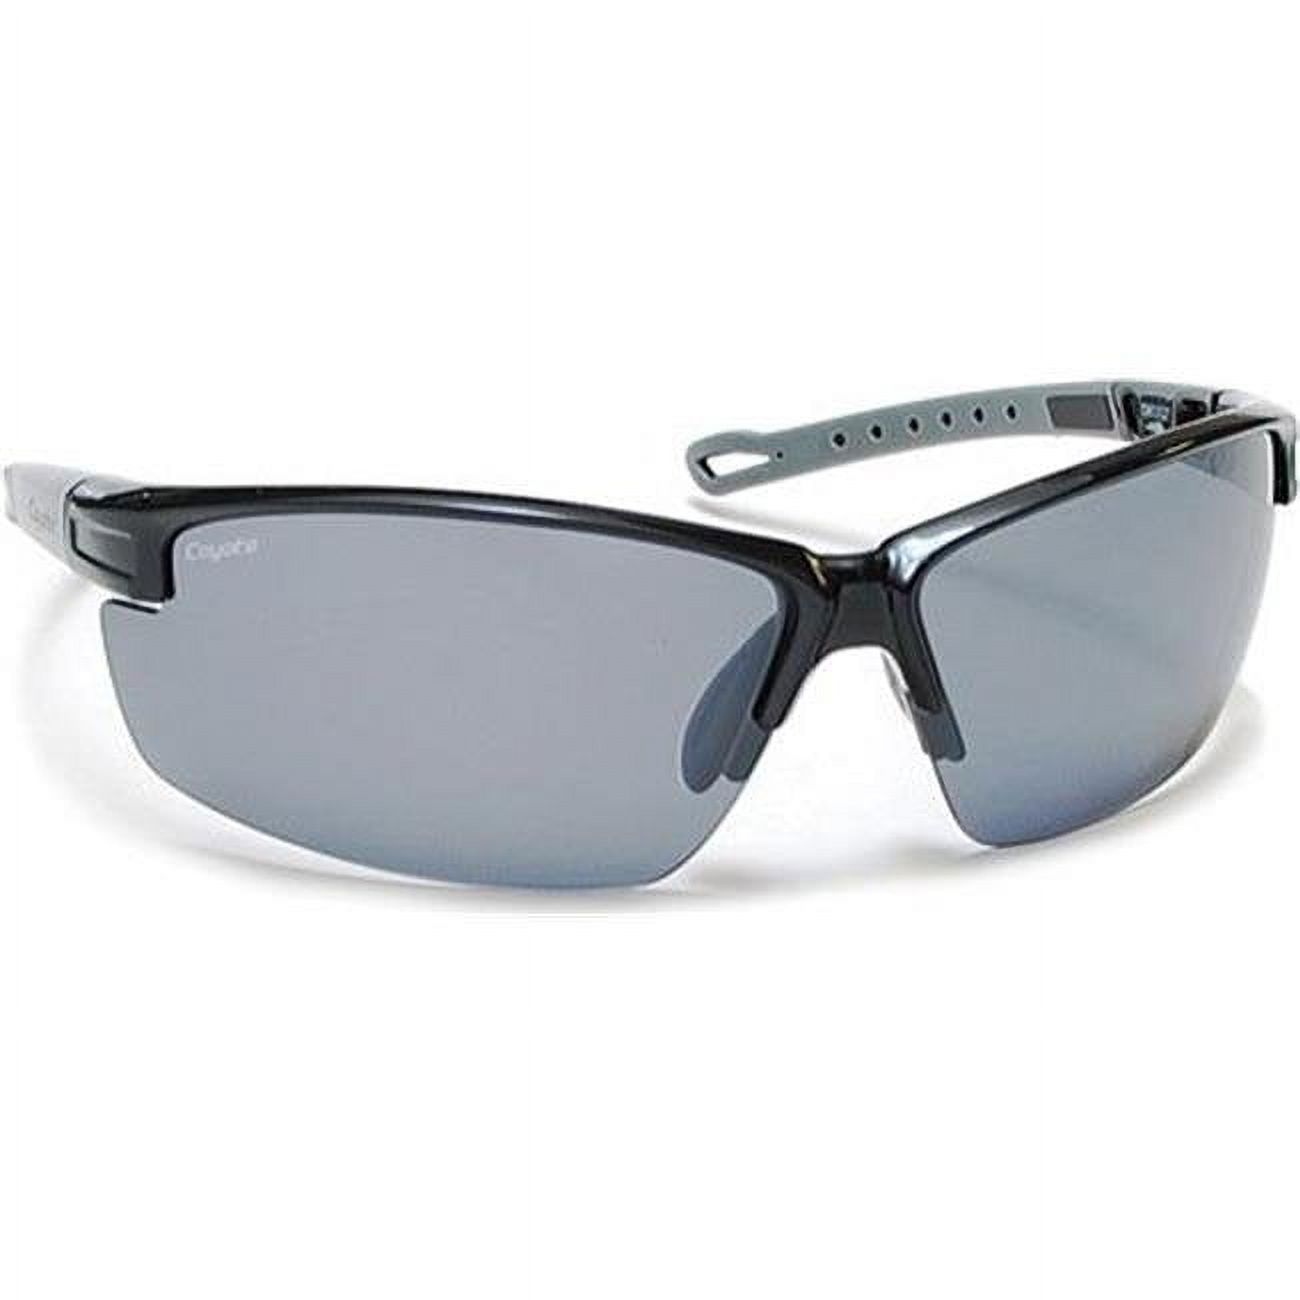 Coyote Eyewear 680562043082 Napa Polarized Street & Sport Sunglasses, Black, Gray & Silver Frame - image 1 of 2